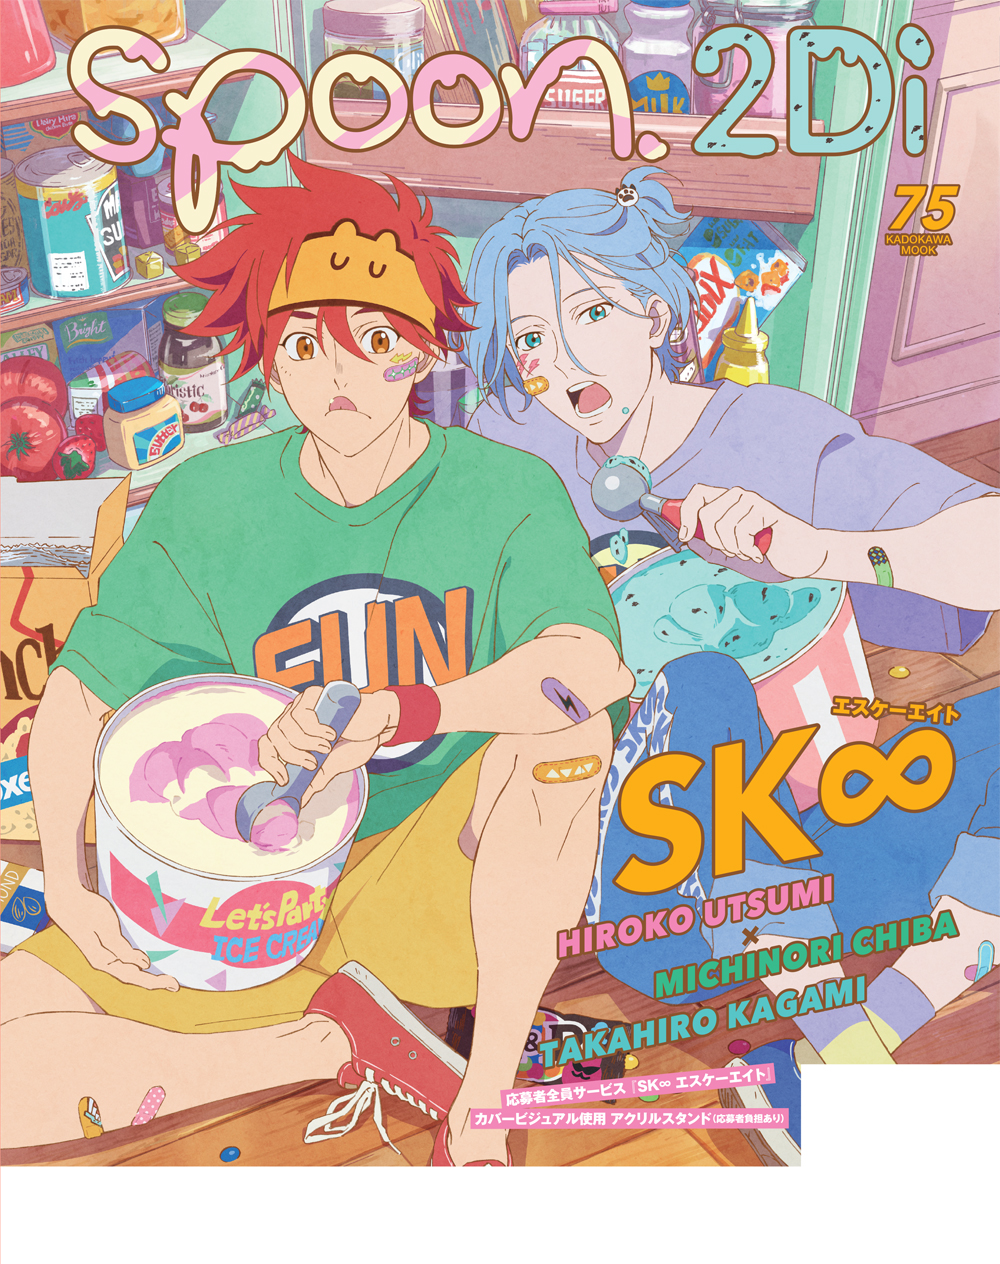 spoon.2Di vol.88 Tsurune Hypnosismic Poster Anime Collection Magazine Japan